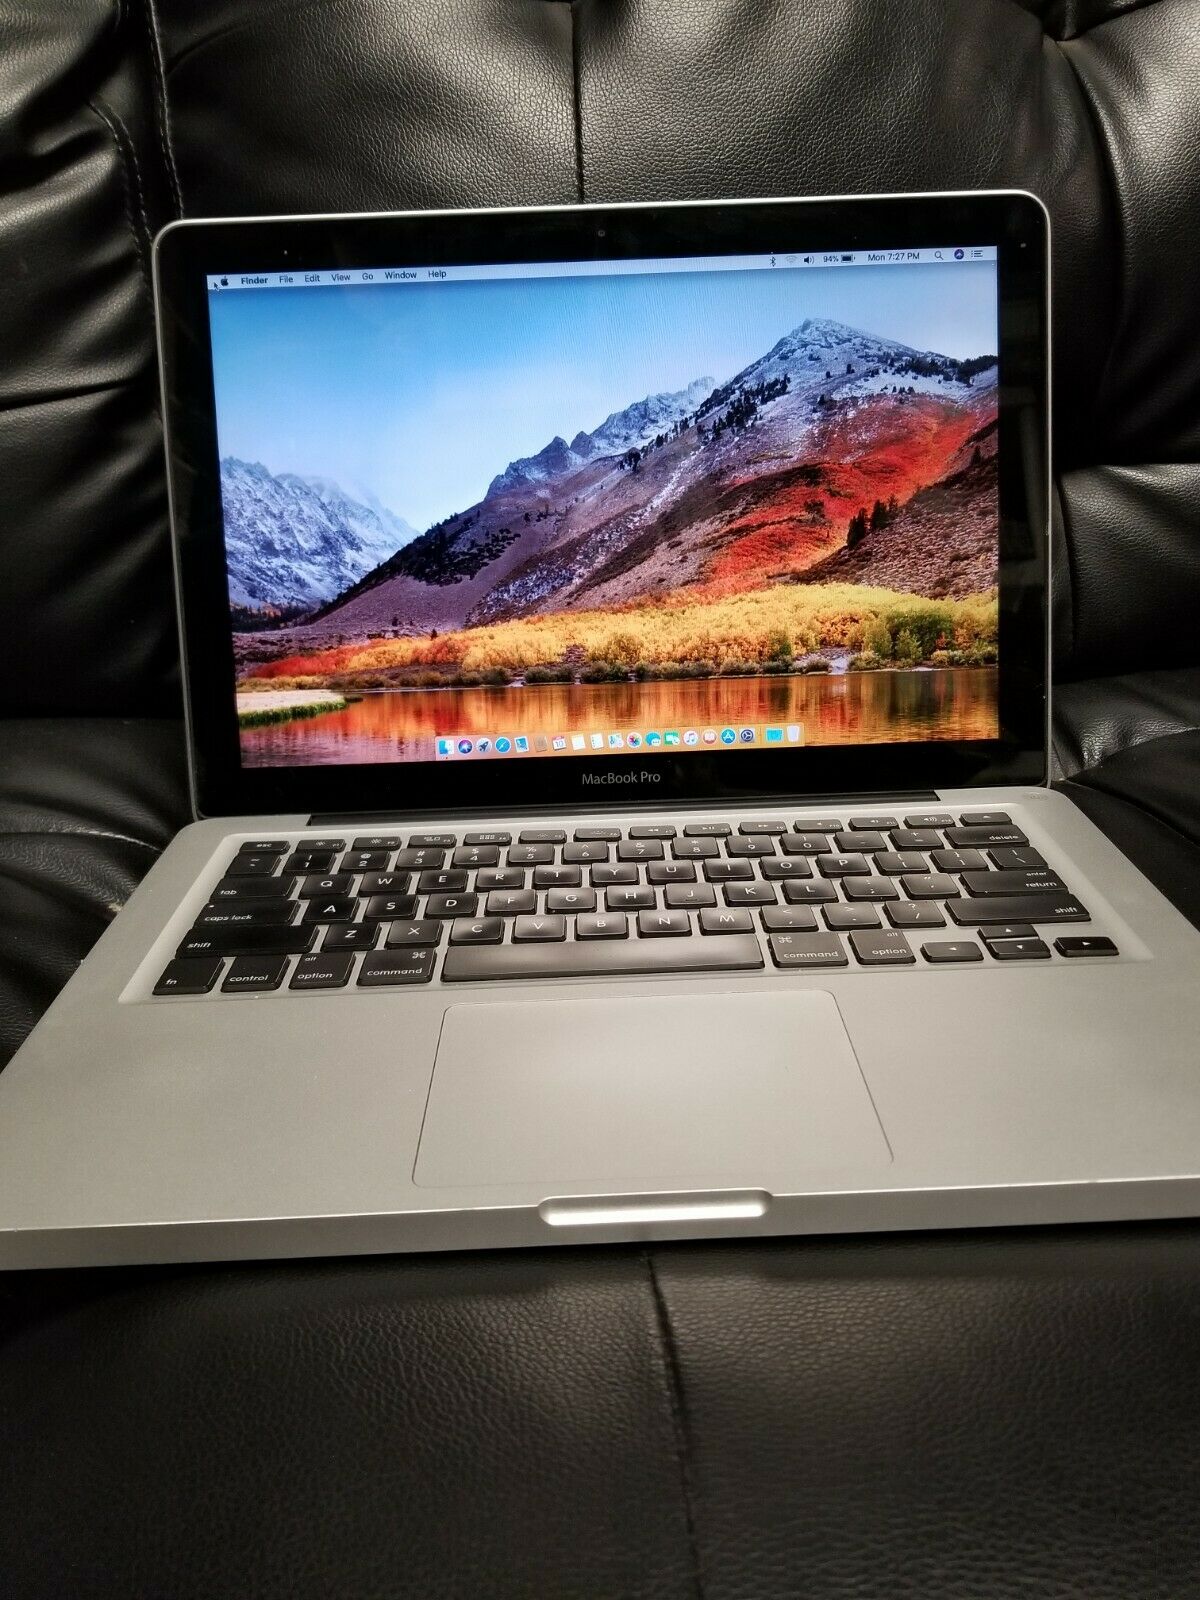 Apple MacBook Pro 13.3" Laptop Intel Core i5 2.4GHz, 8GB, 120GB SSD GRADE B